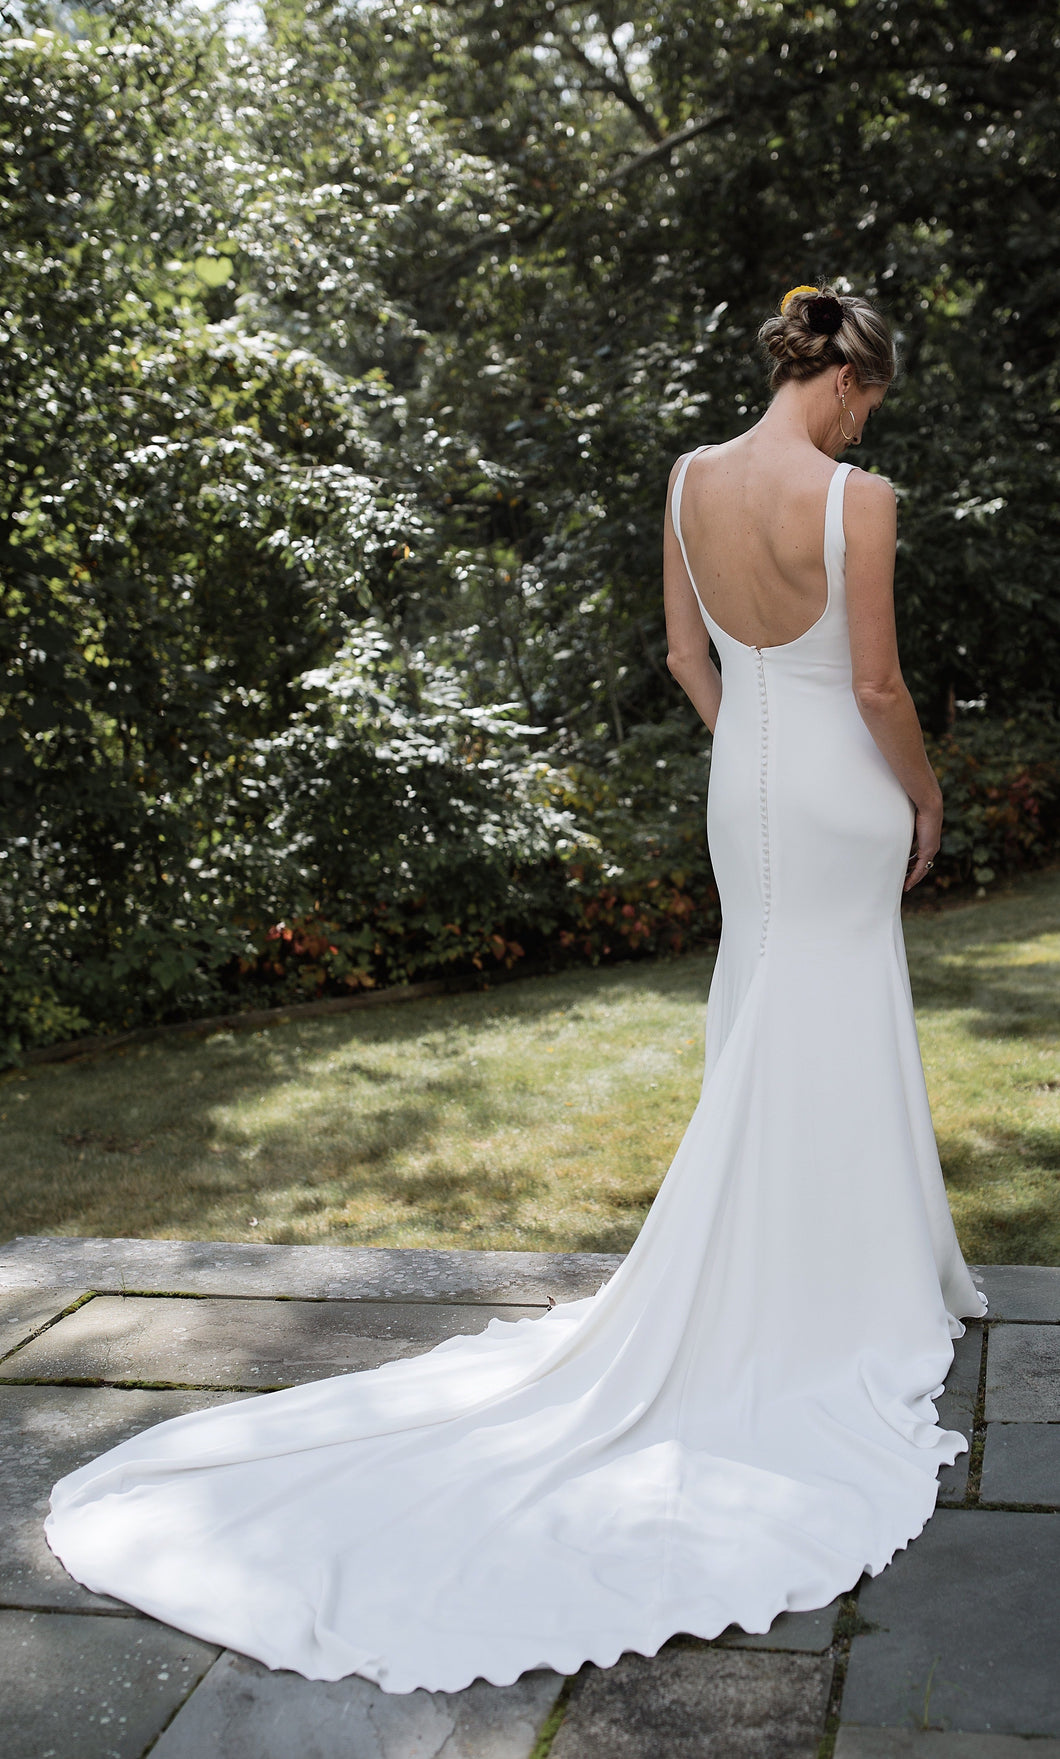 Pronovias 'Hispalis' size 8 used wedding dress back view on bride